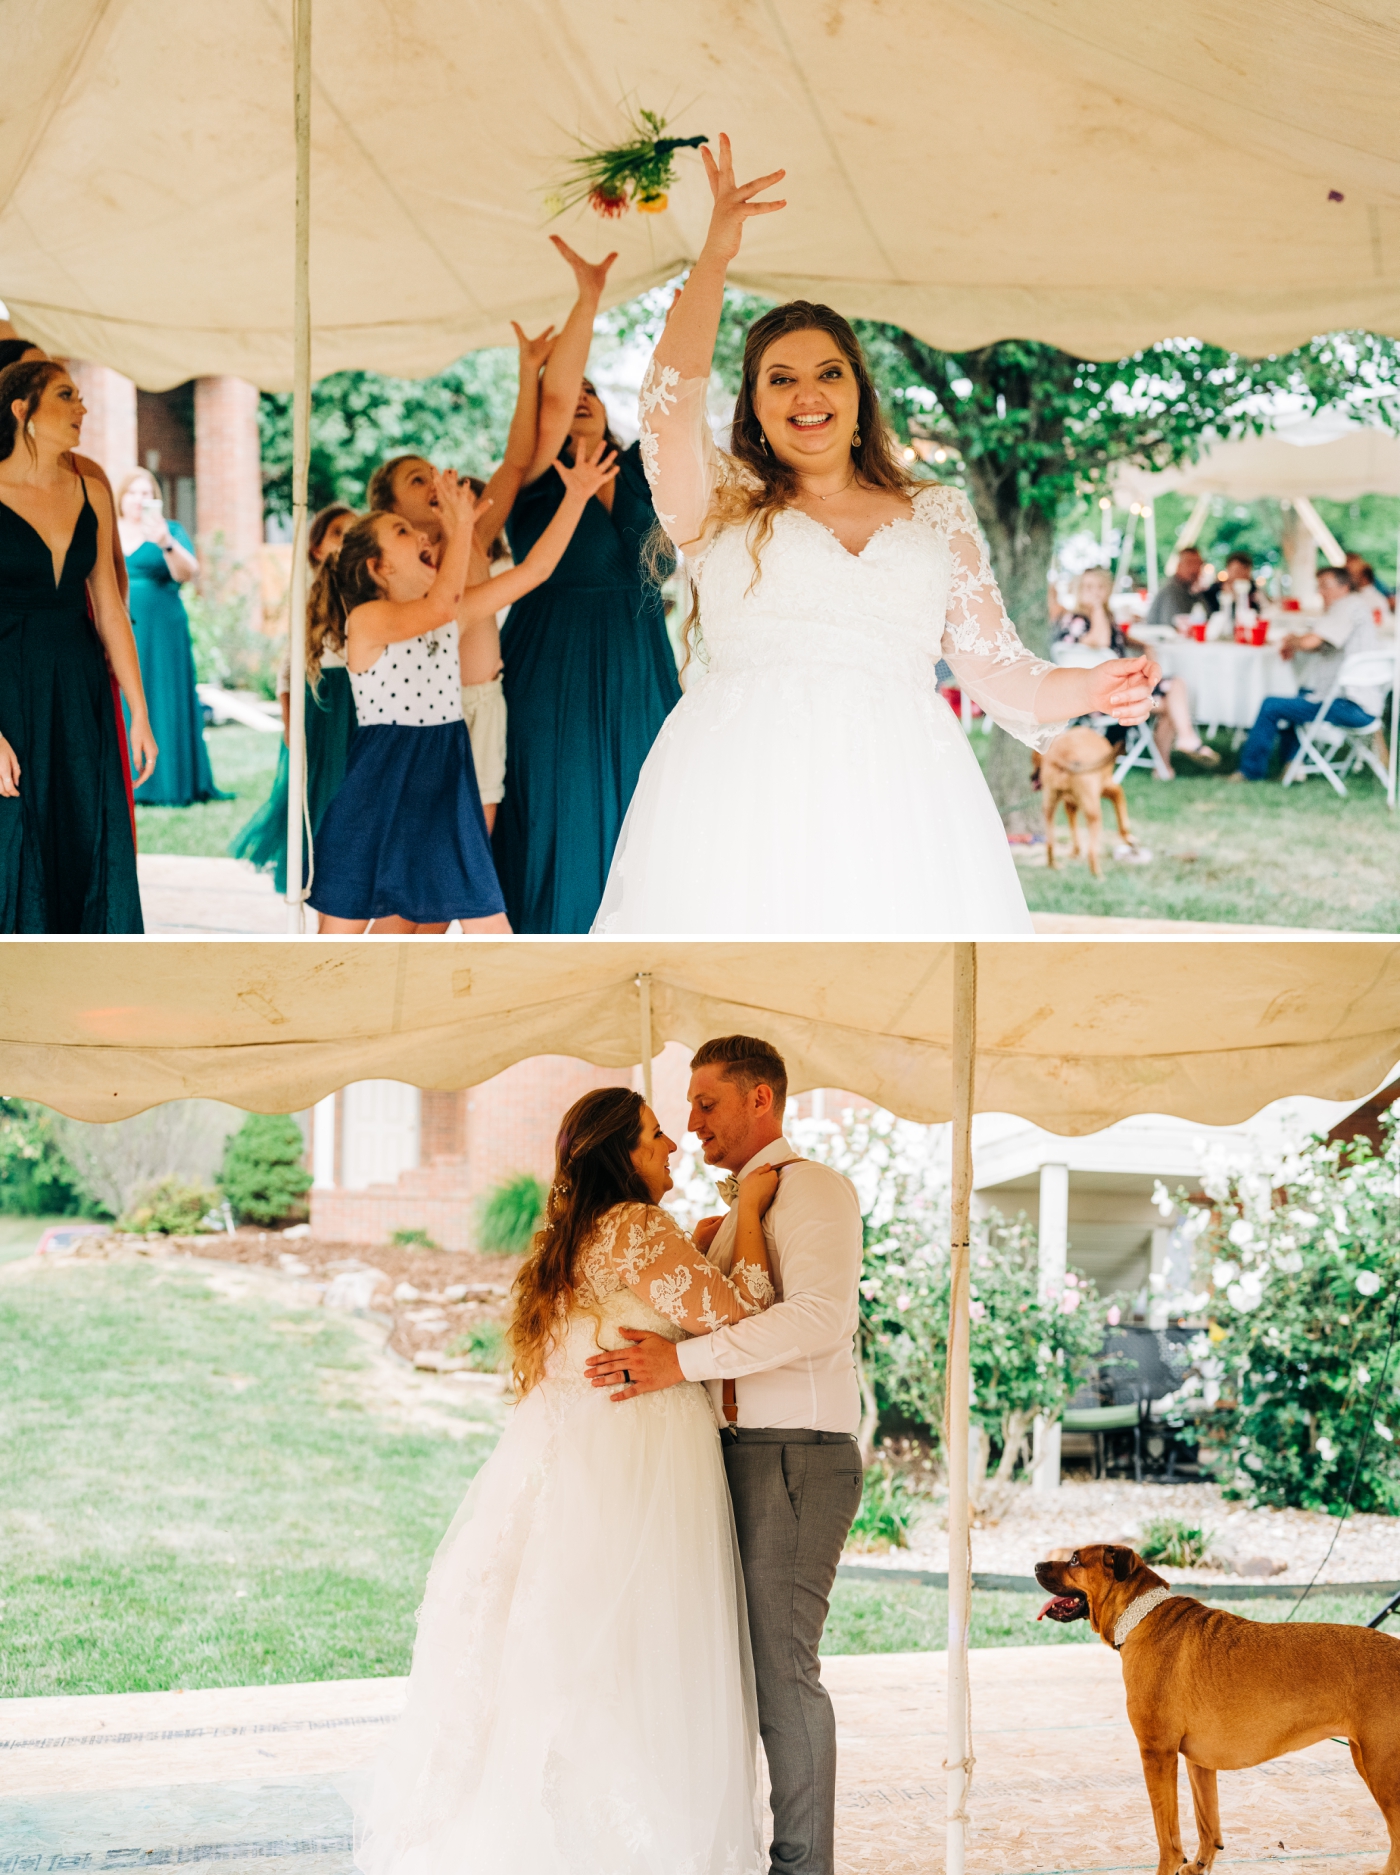 Backyard wedding reception in Washington, Indiana